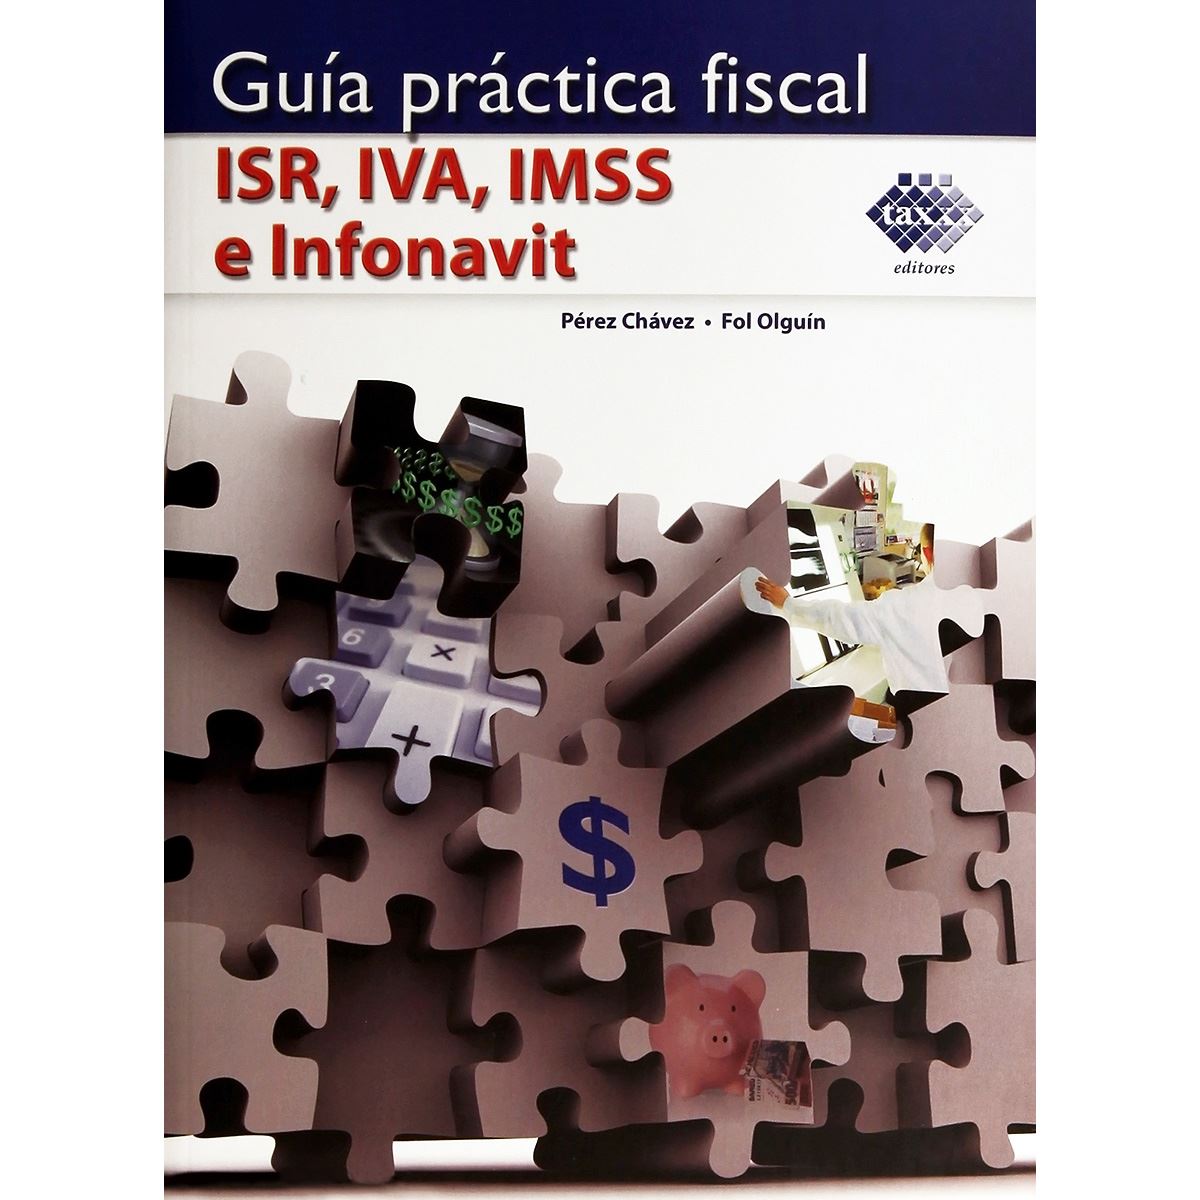 Guia practica fiscal ISR, IVA, IMSS e Infonavit